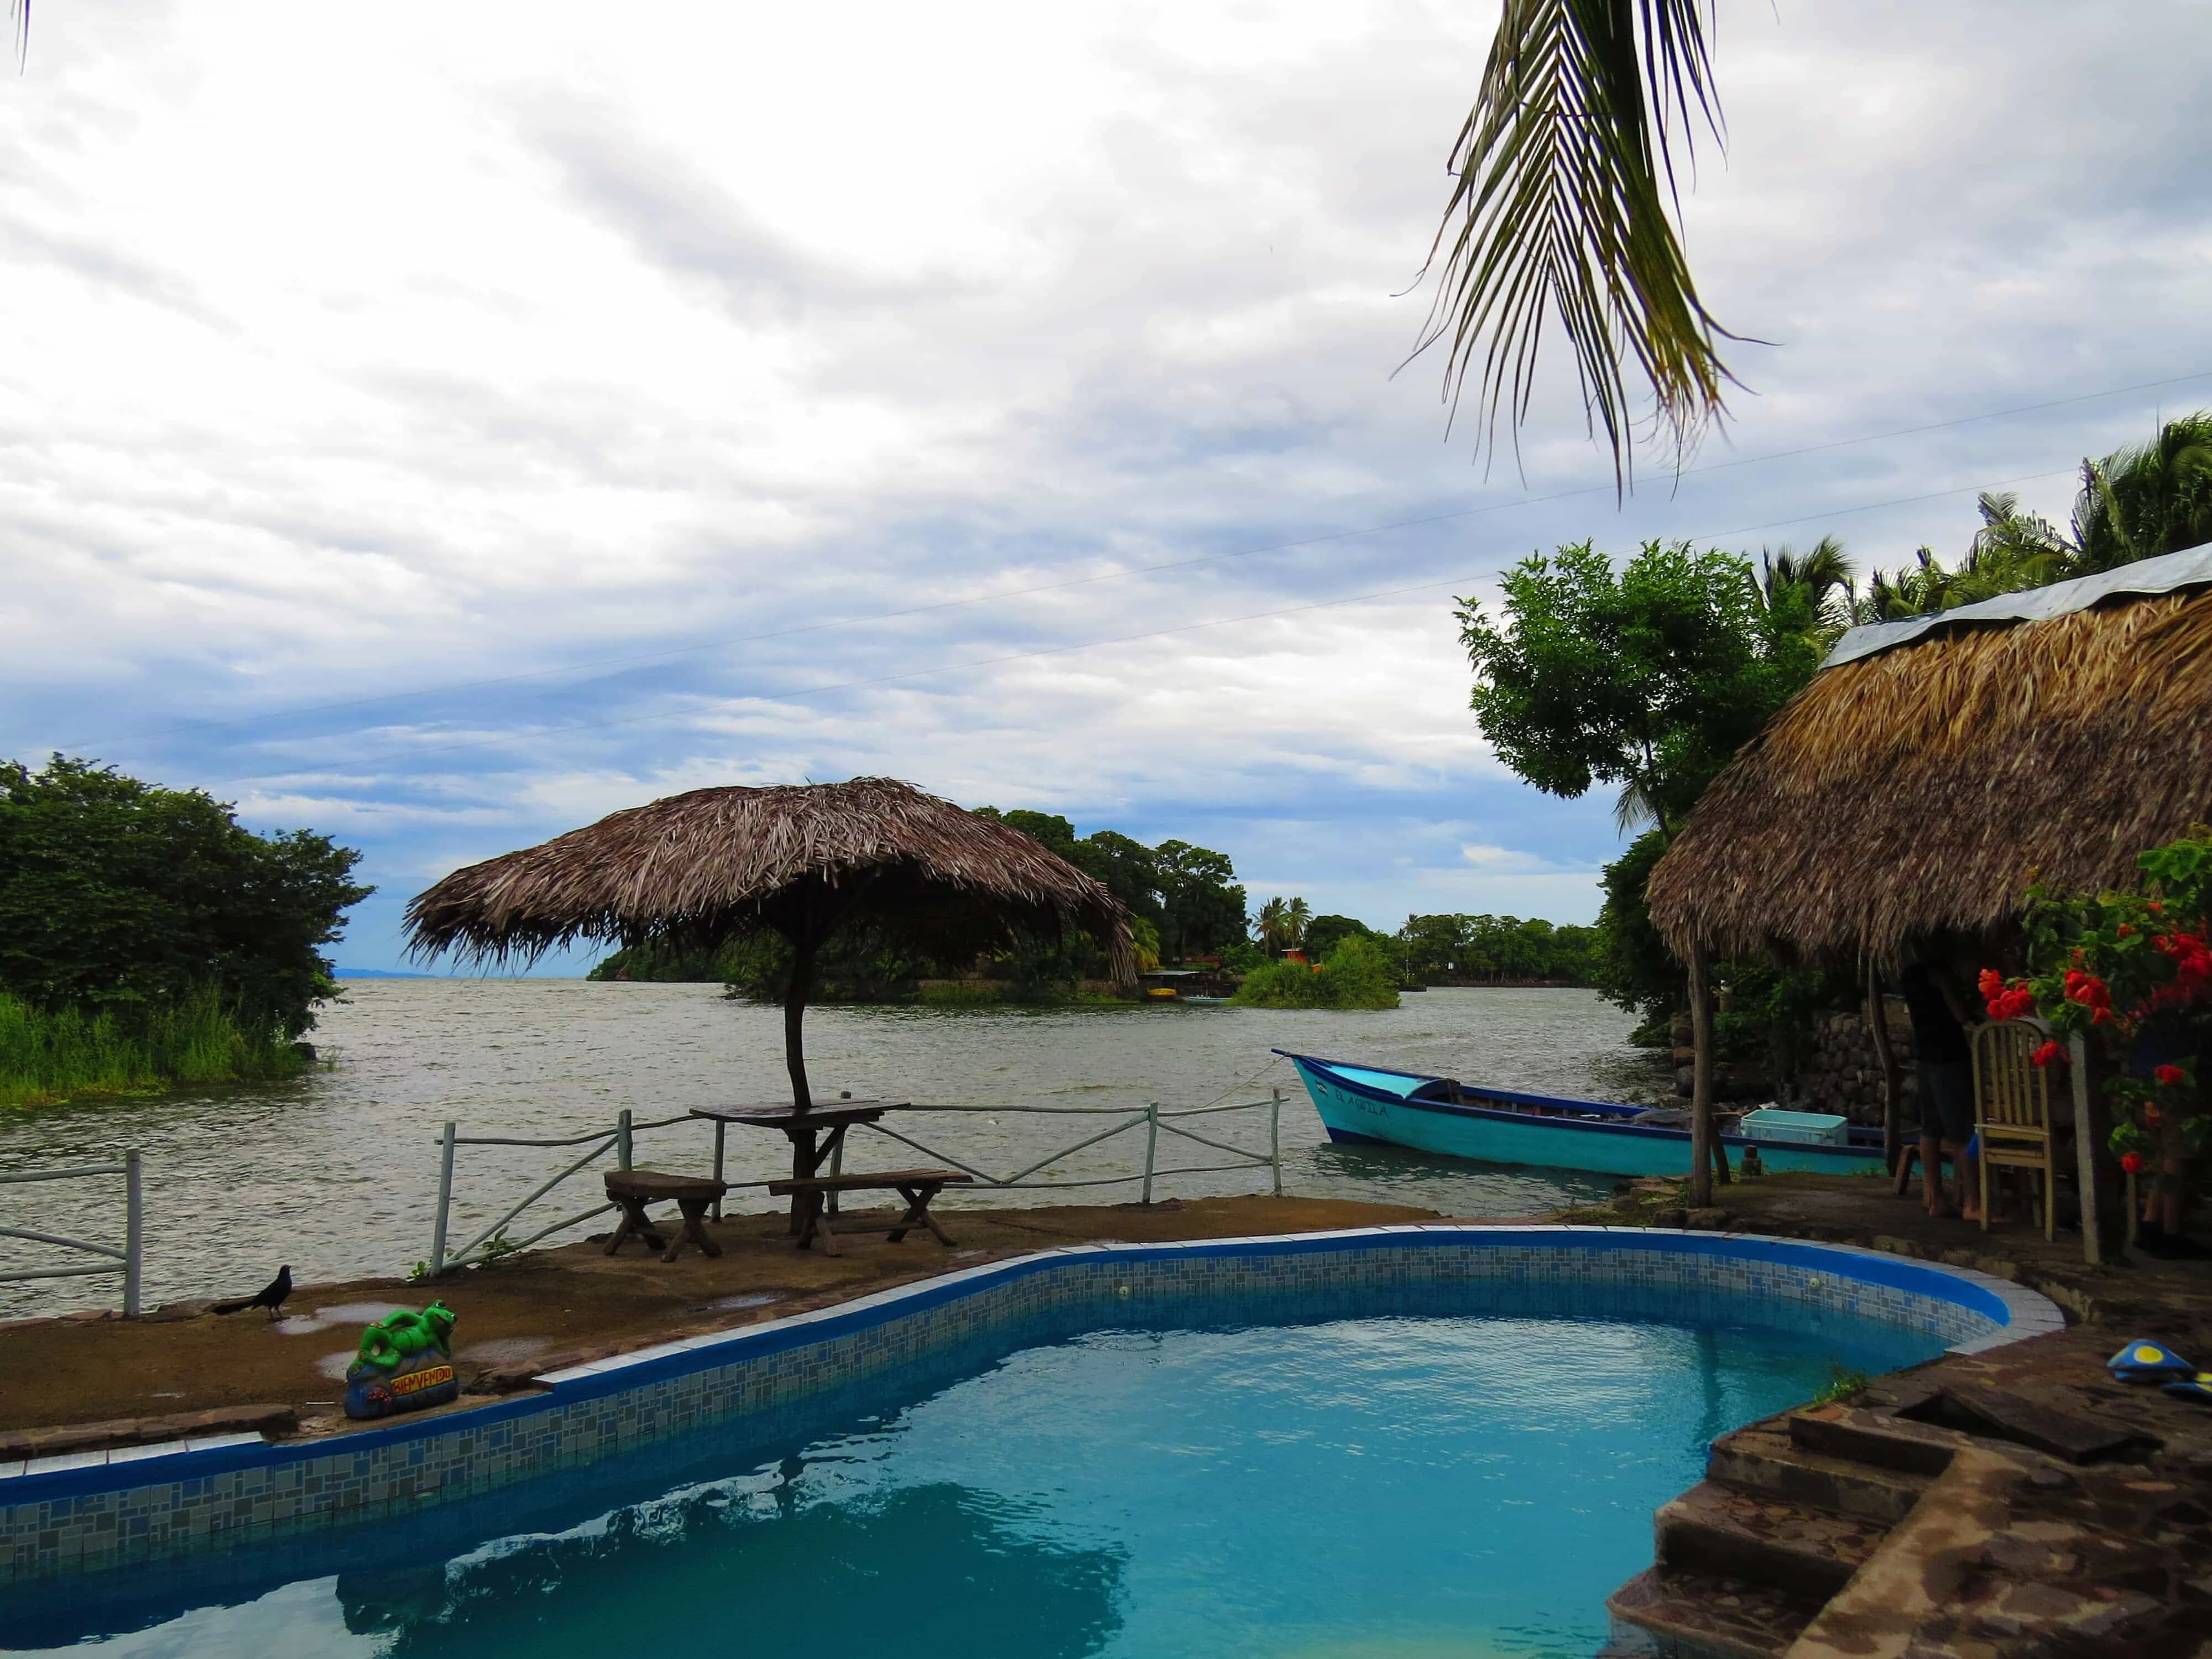 Go island hopping in lake Granada -Things To Do In Nicaragua